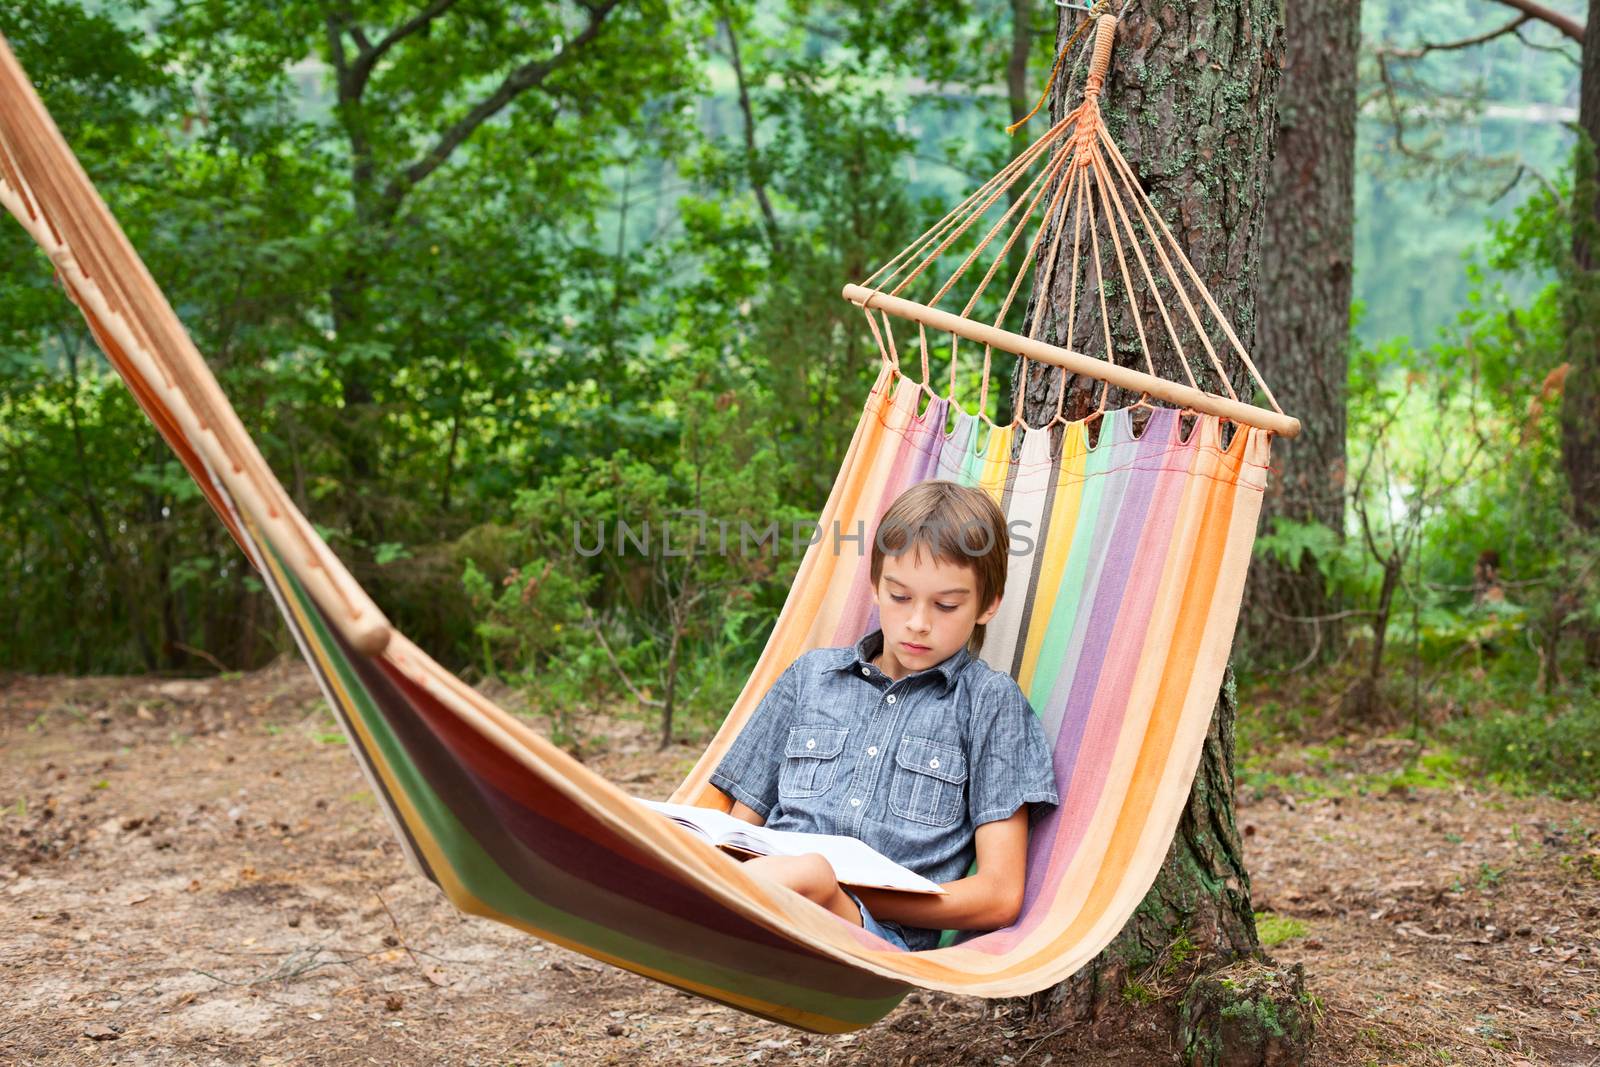 Child reading book in hammock by naumoid